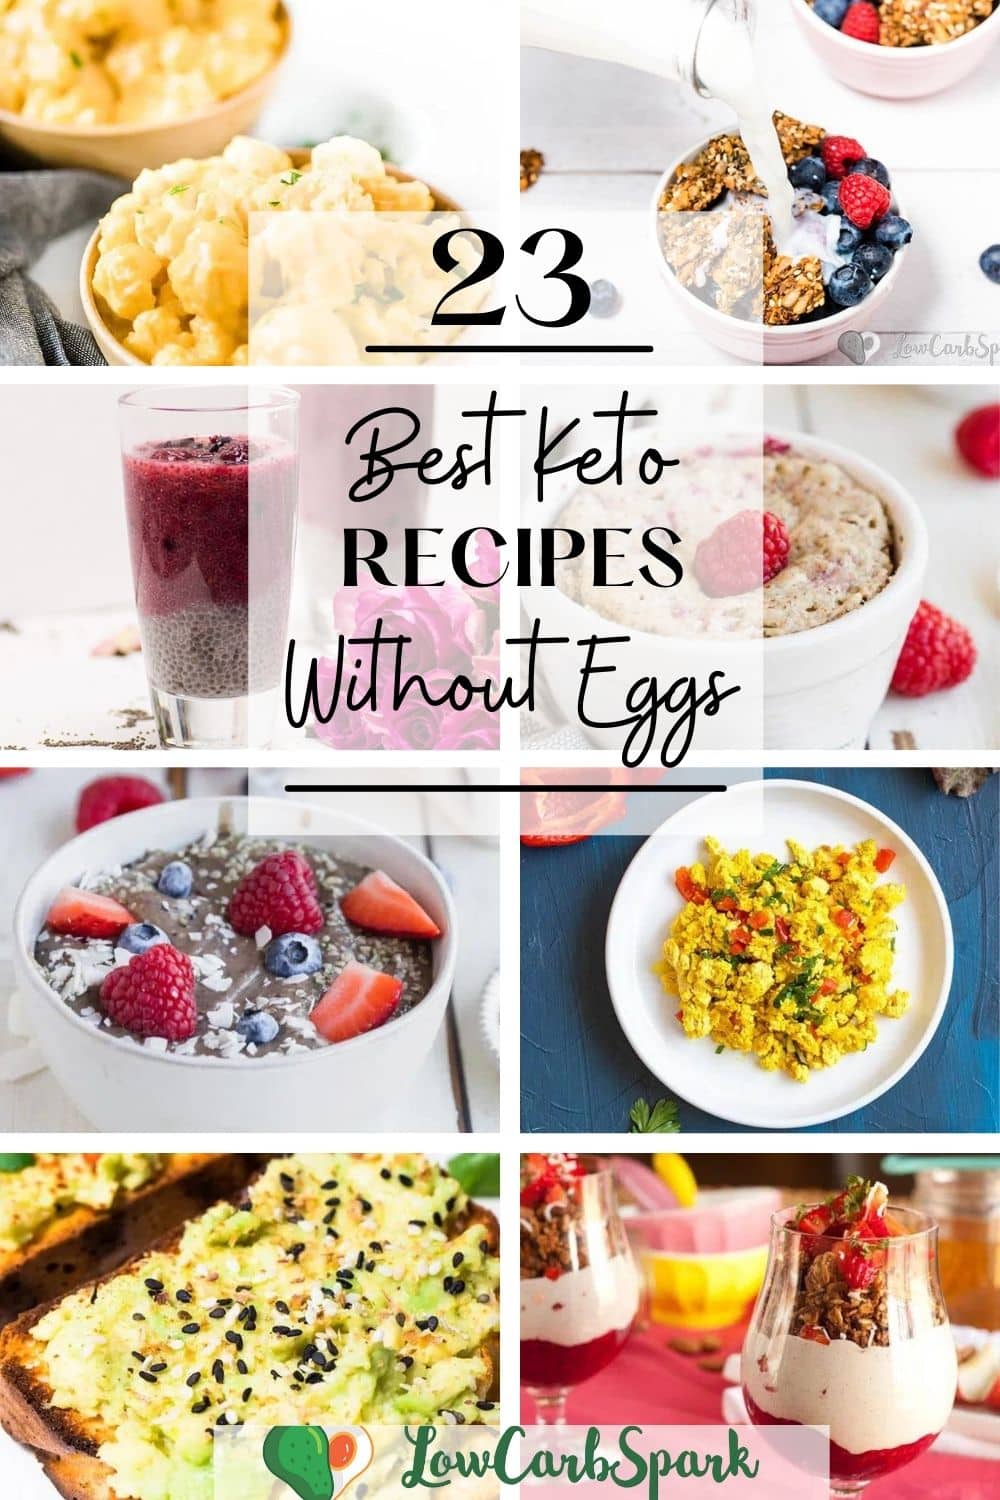 Best Keto Porridge Recipe - Super Healthy (4g Net Carbs)